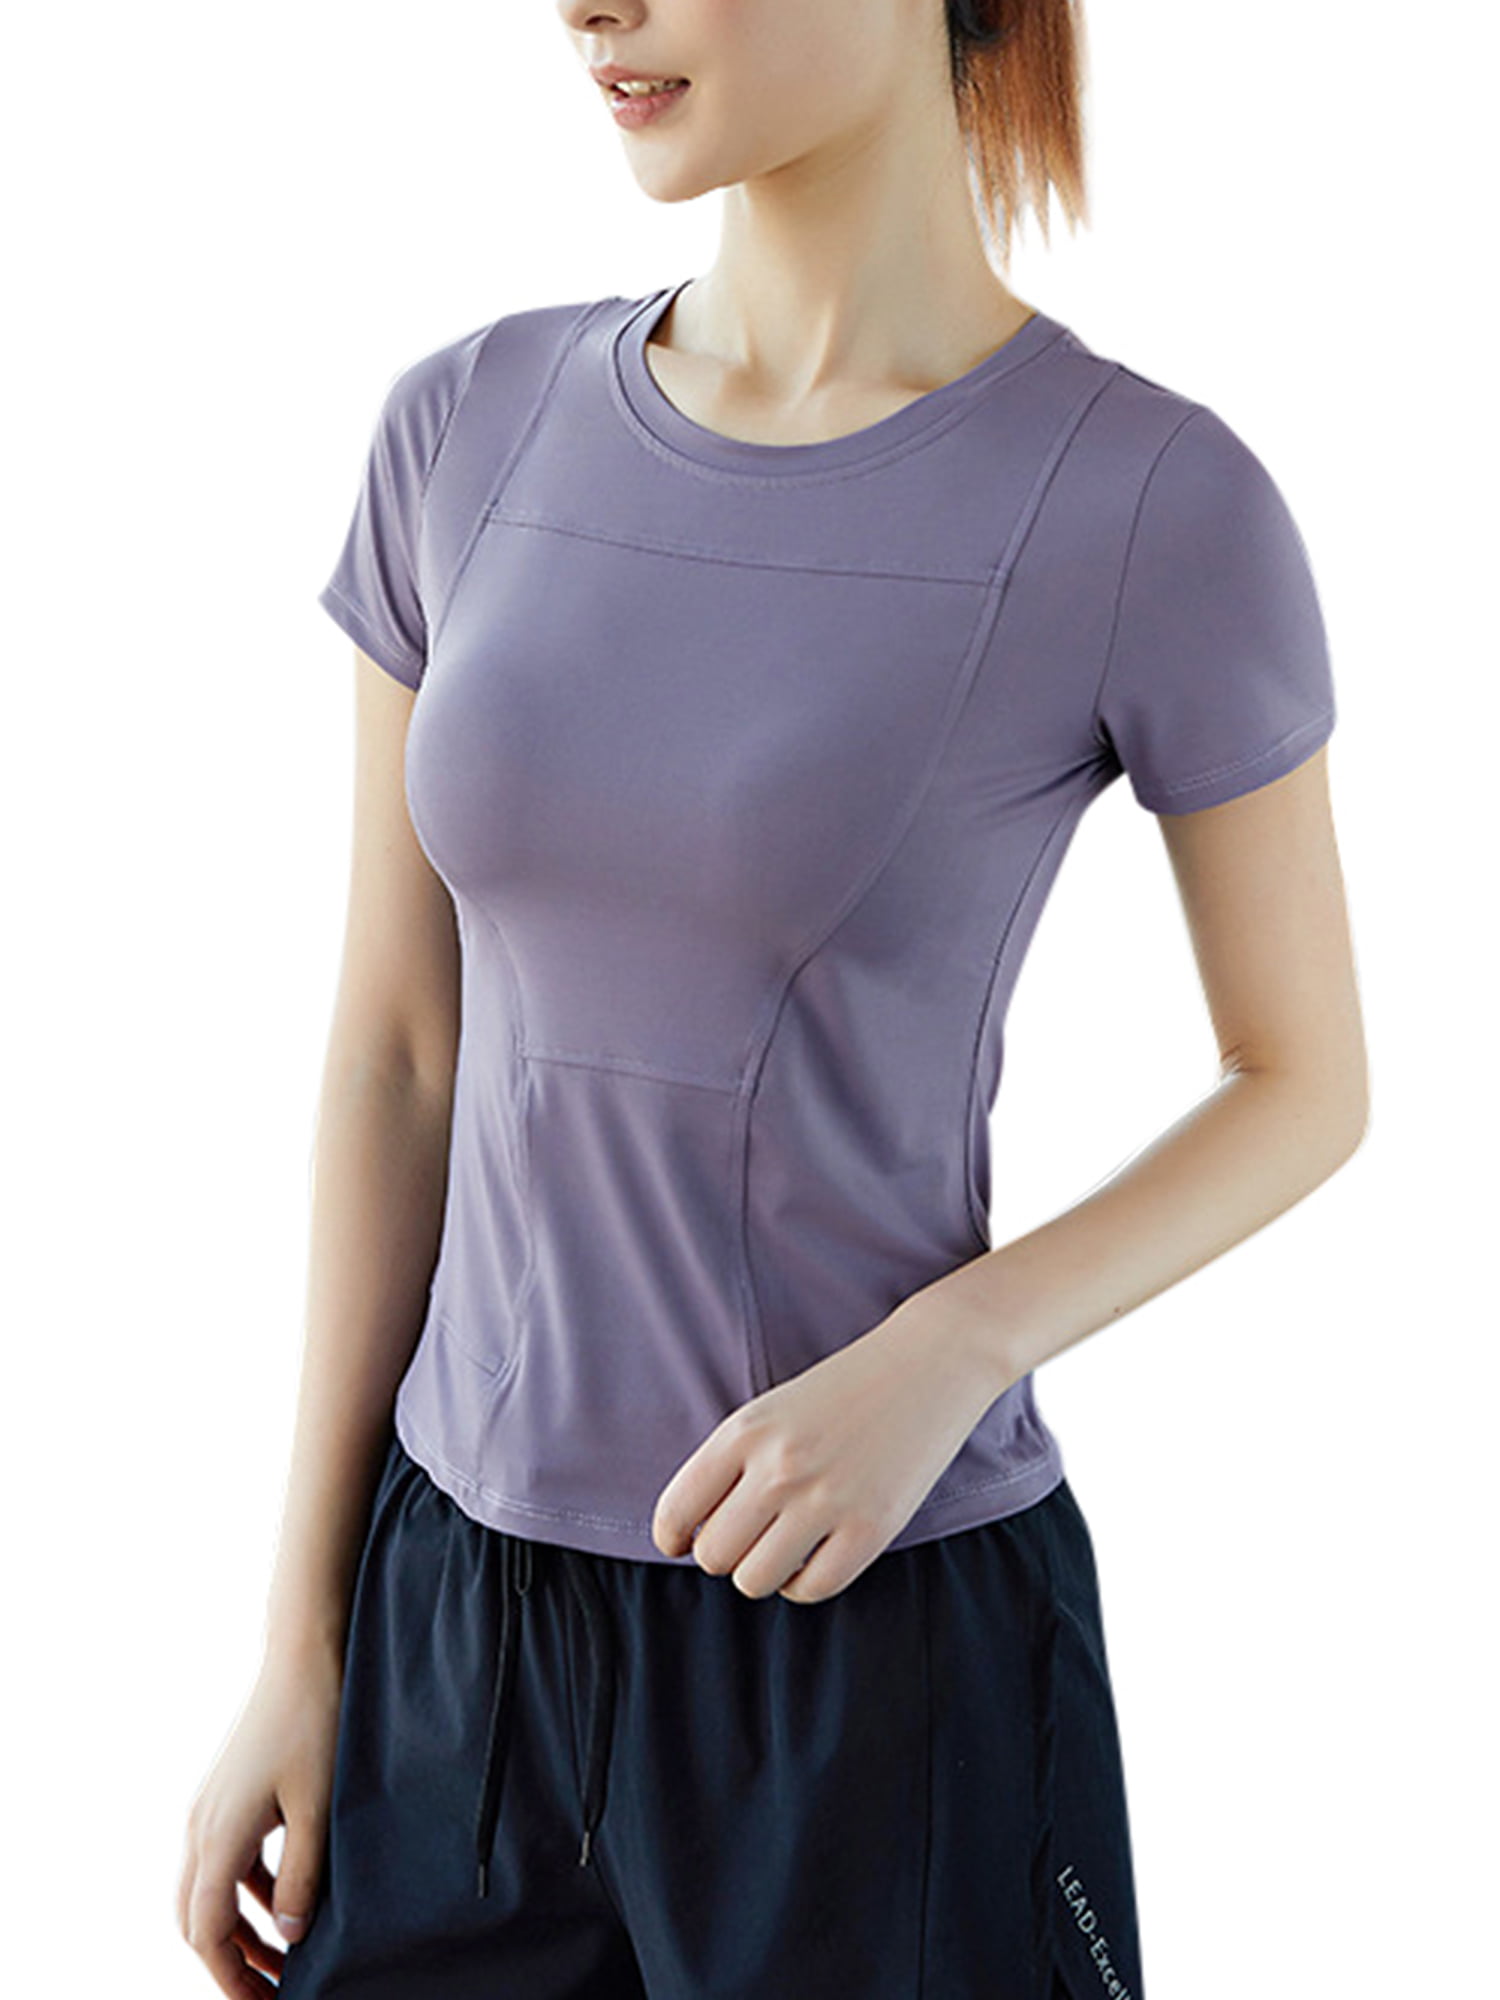 Its Taco Time T-Shirt Teen Girls Crop Tops Workout Gym Shirt Slim Fit Shirt